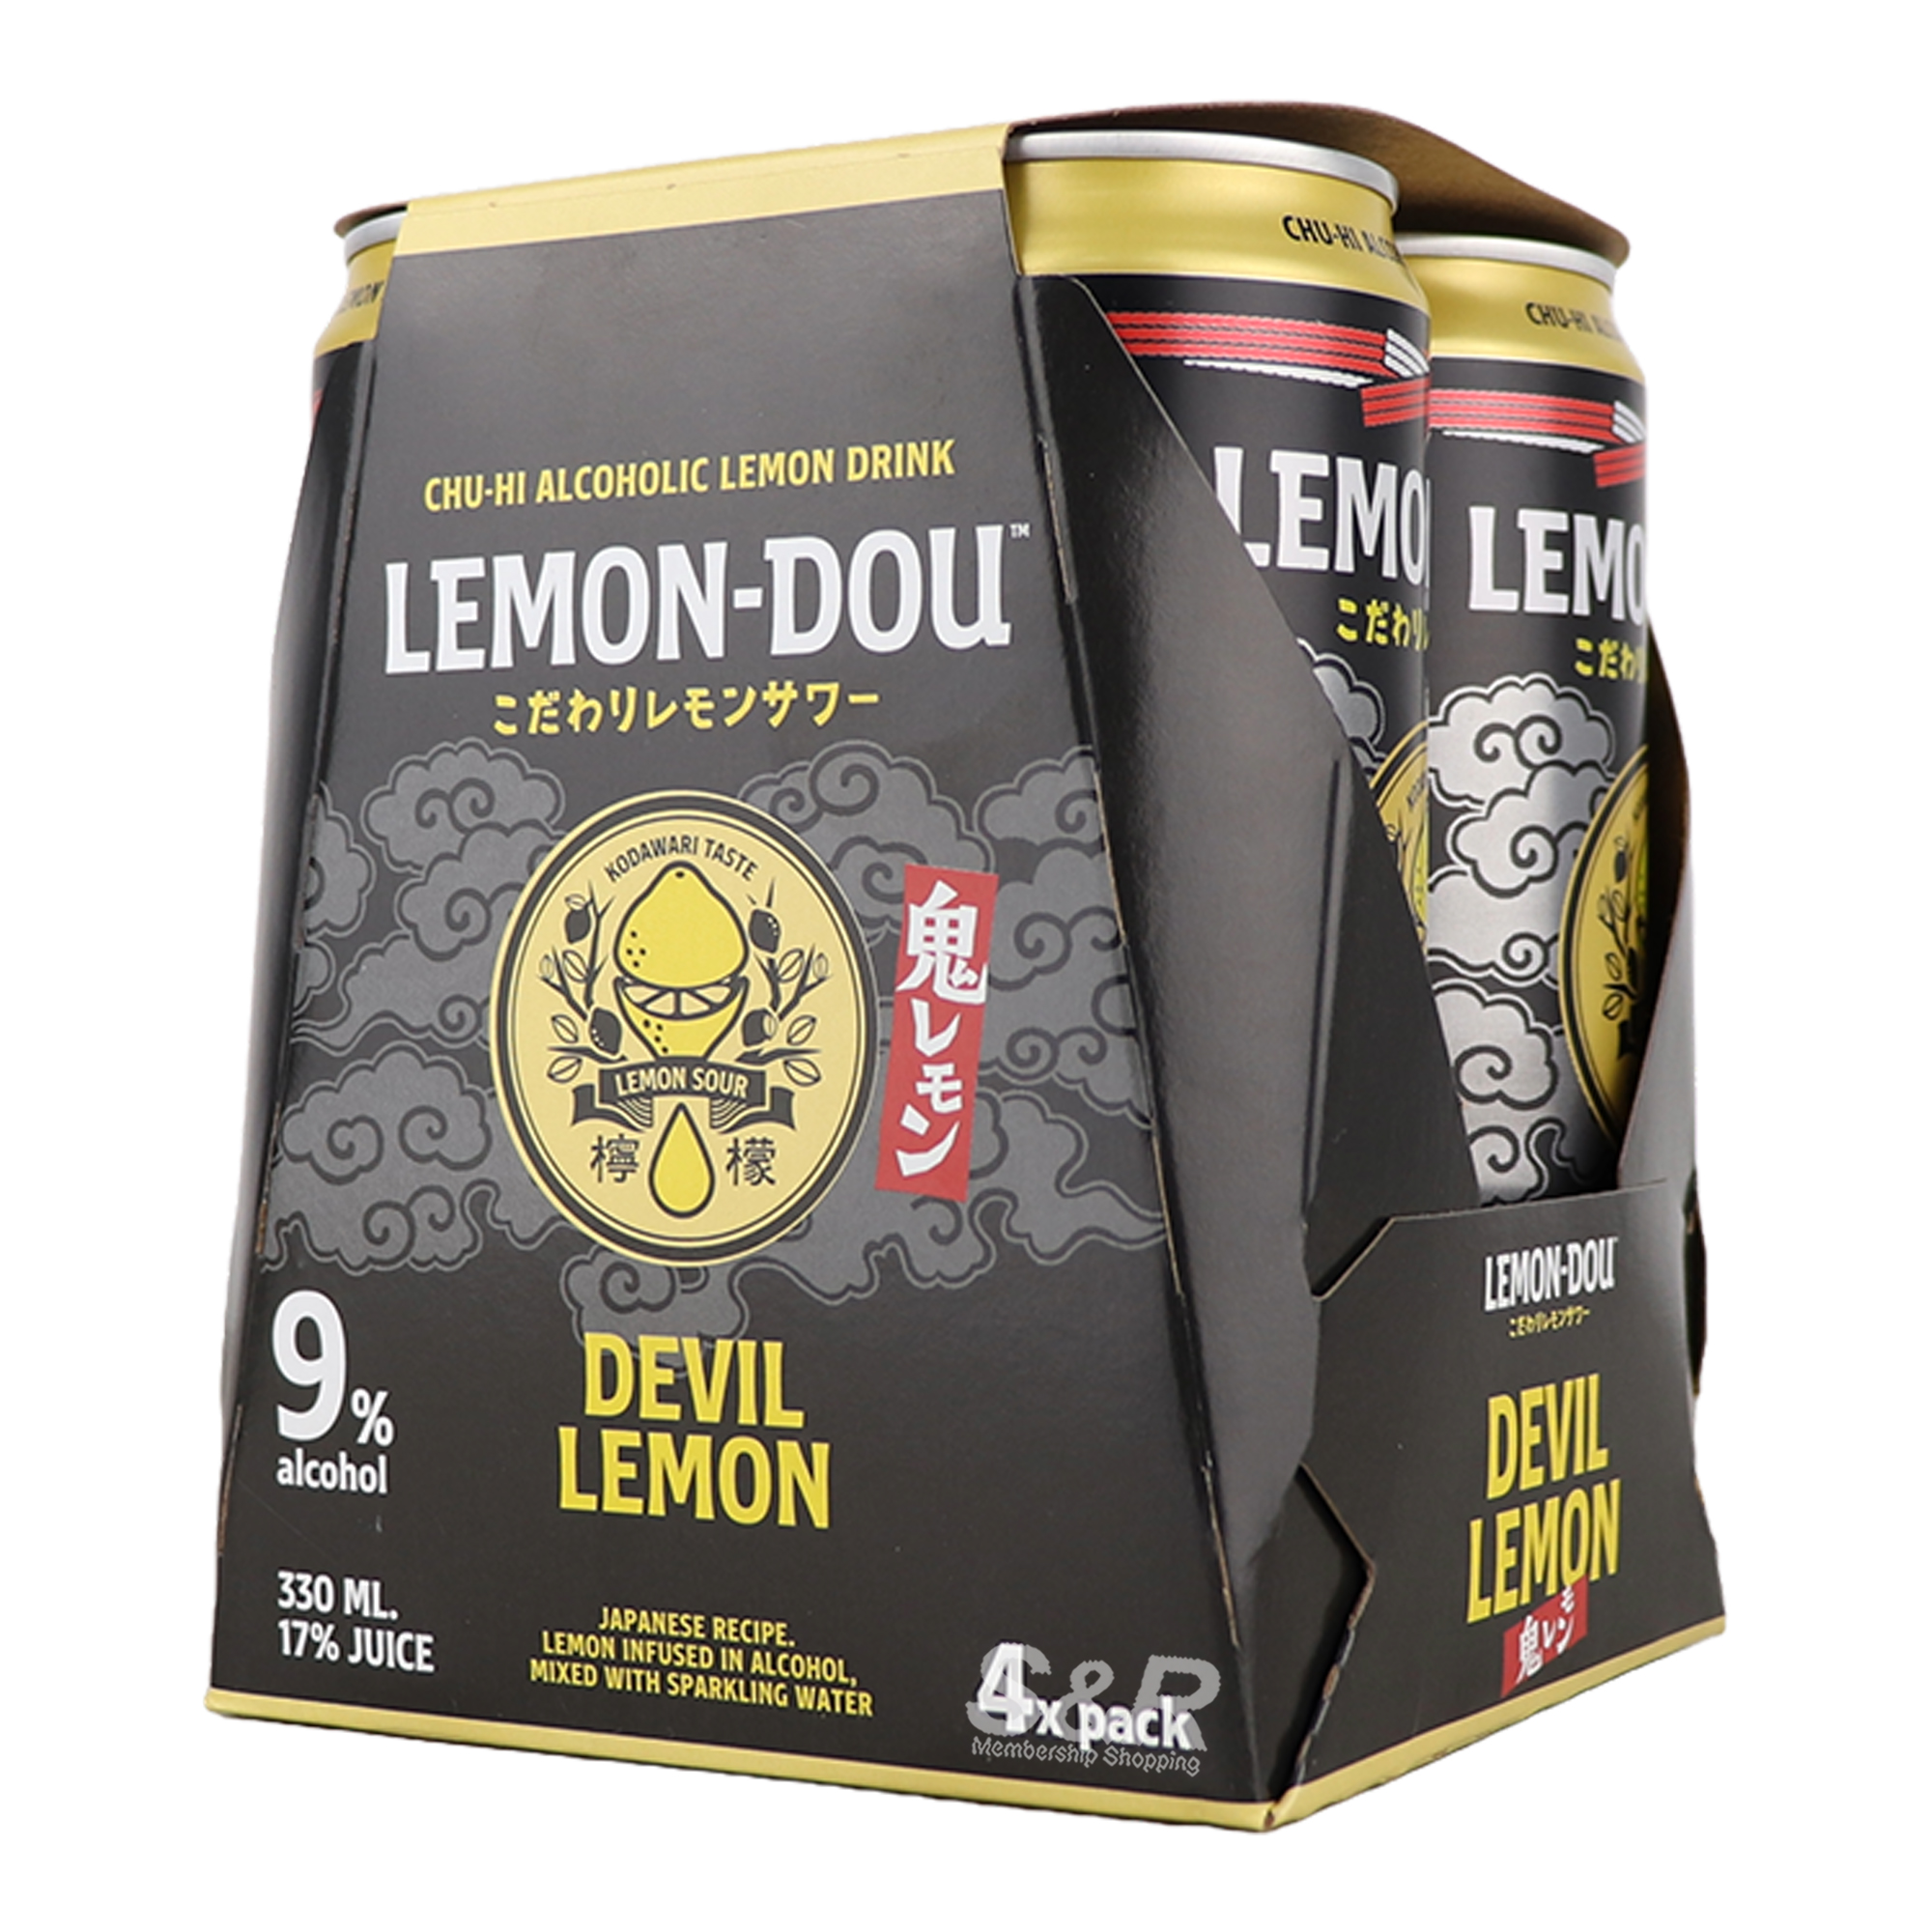 Lemon-Dou Devil Lemon 4pcs x 330mL